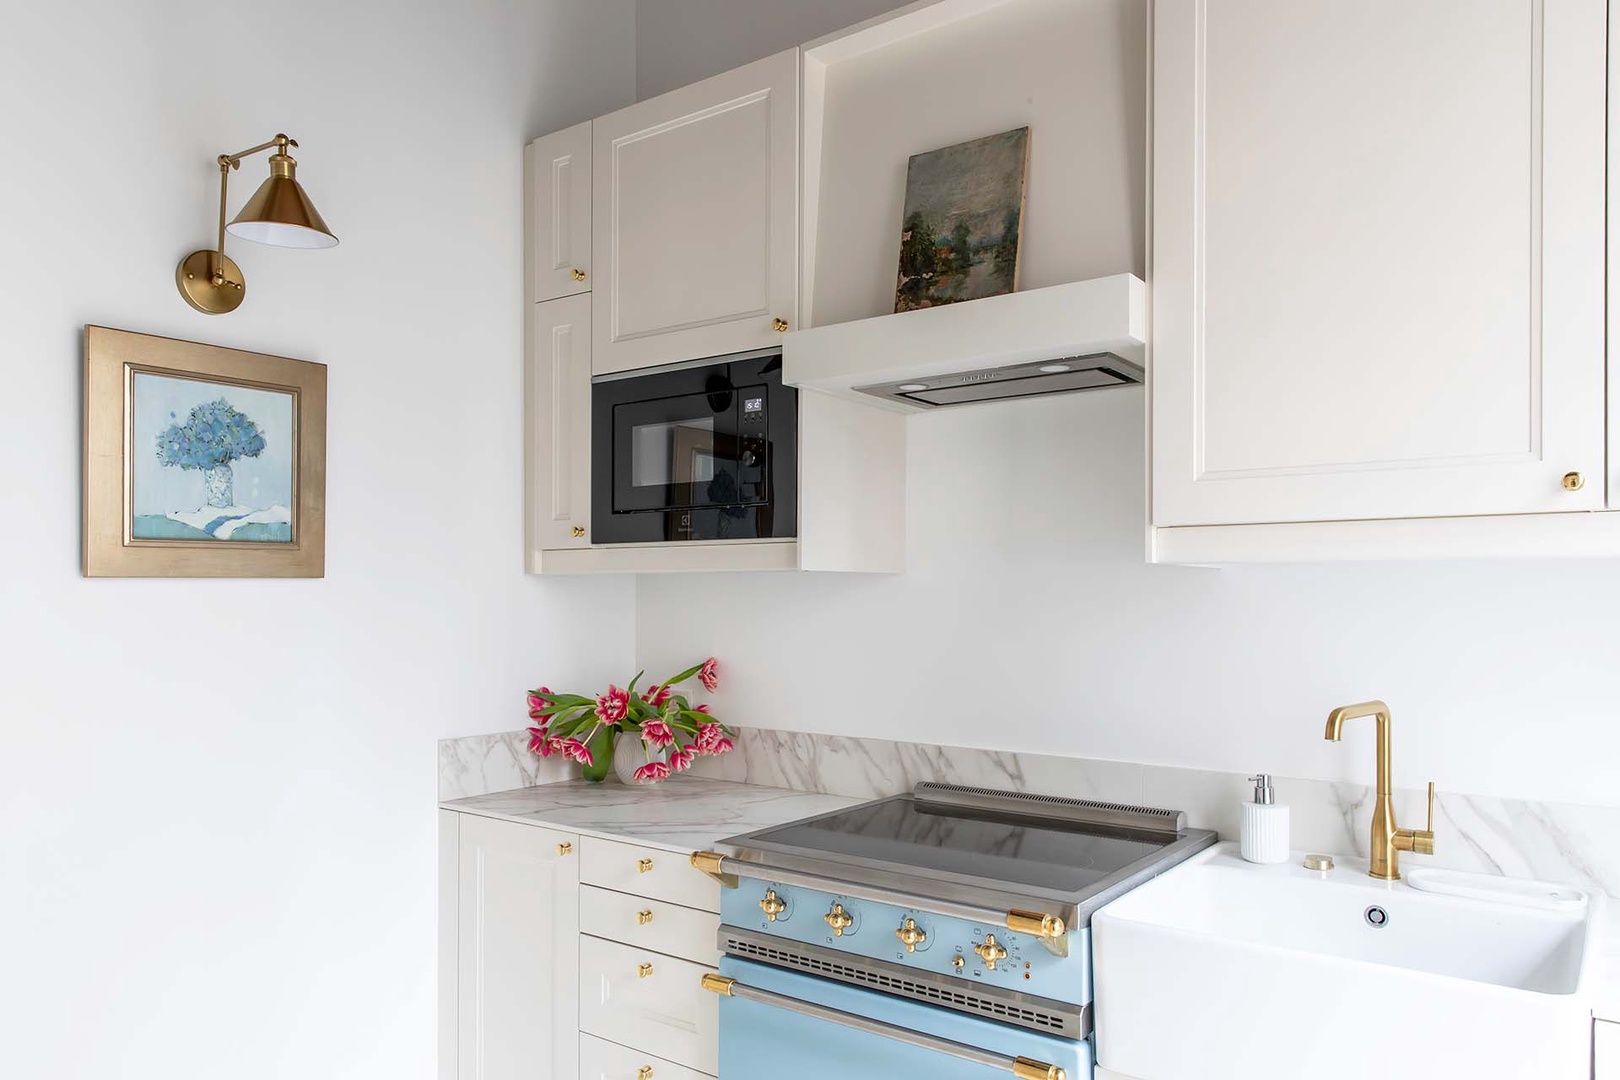 Gorgeous modern kitchen with luxury appliances.